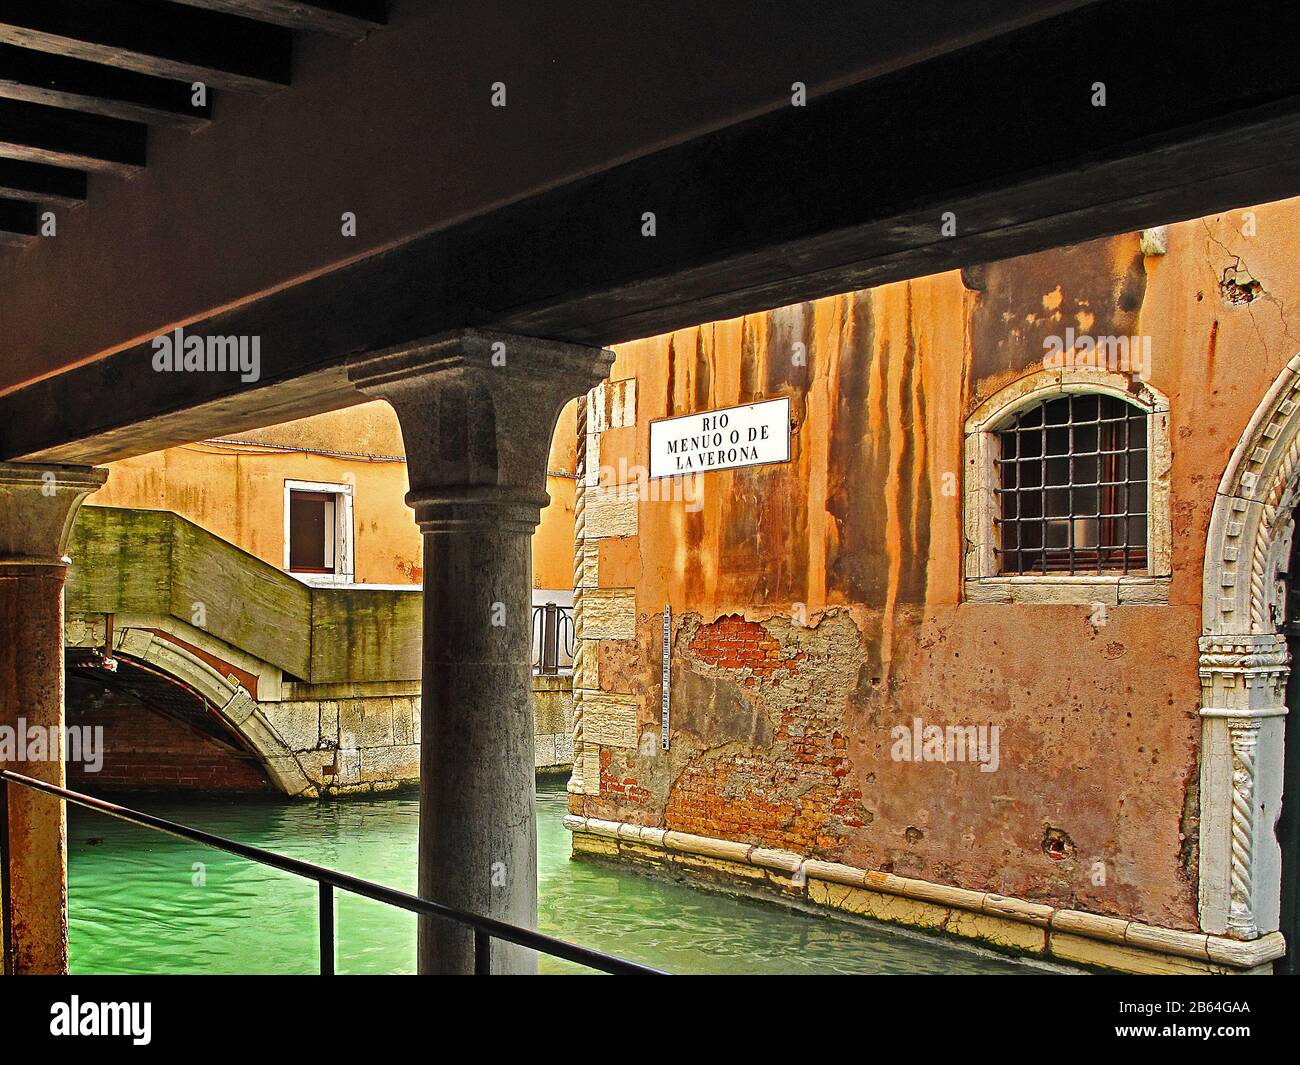 Covered walkway on the Canal street of Rio Menuo o De La Verona,Venice Italy Stock Photo